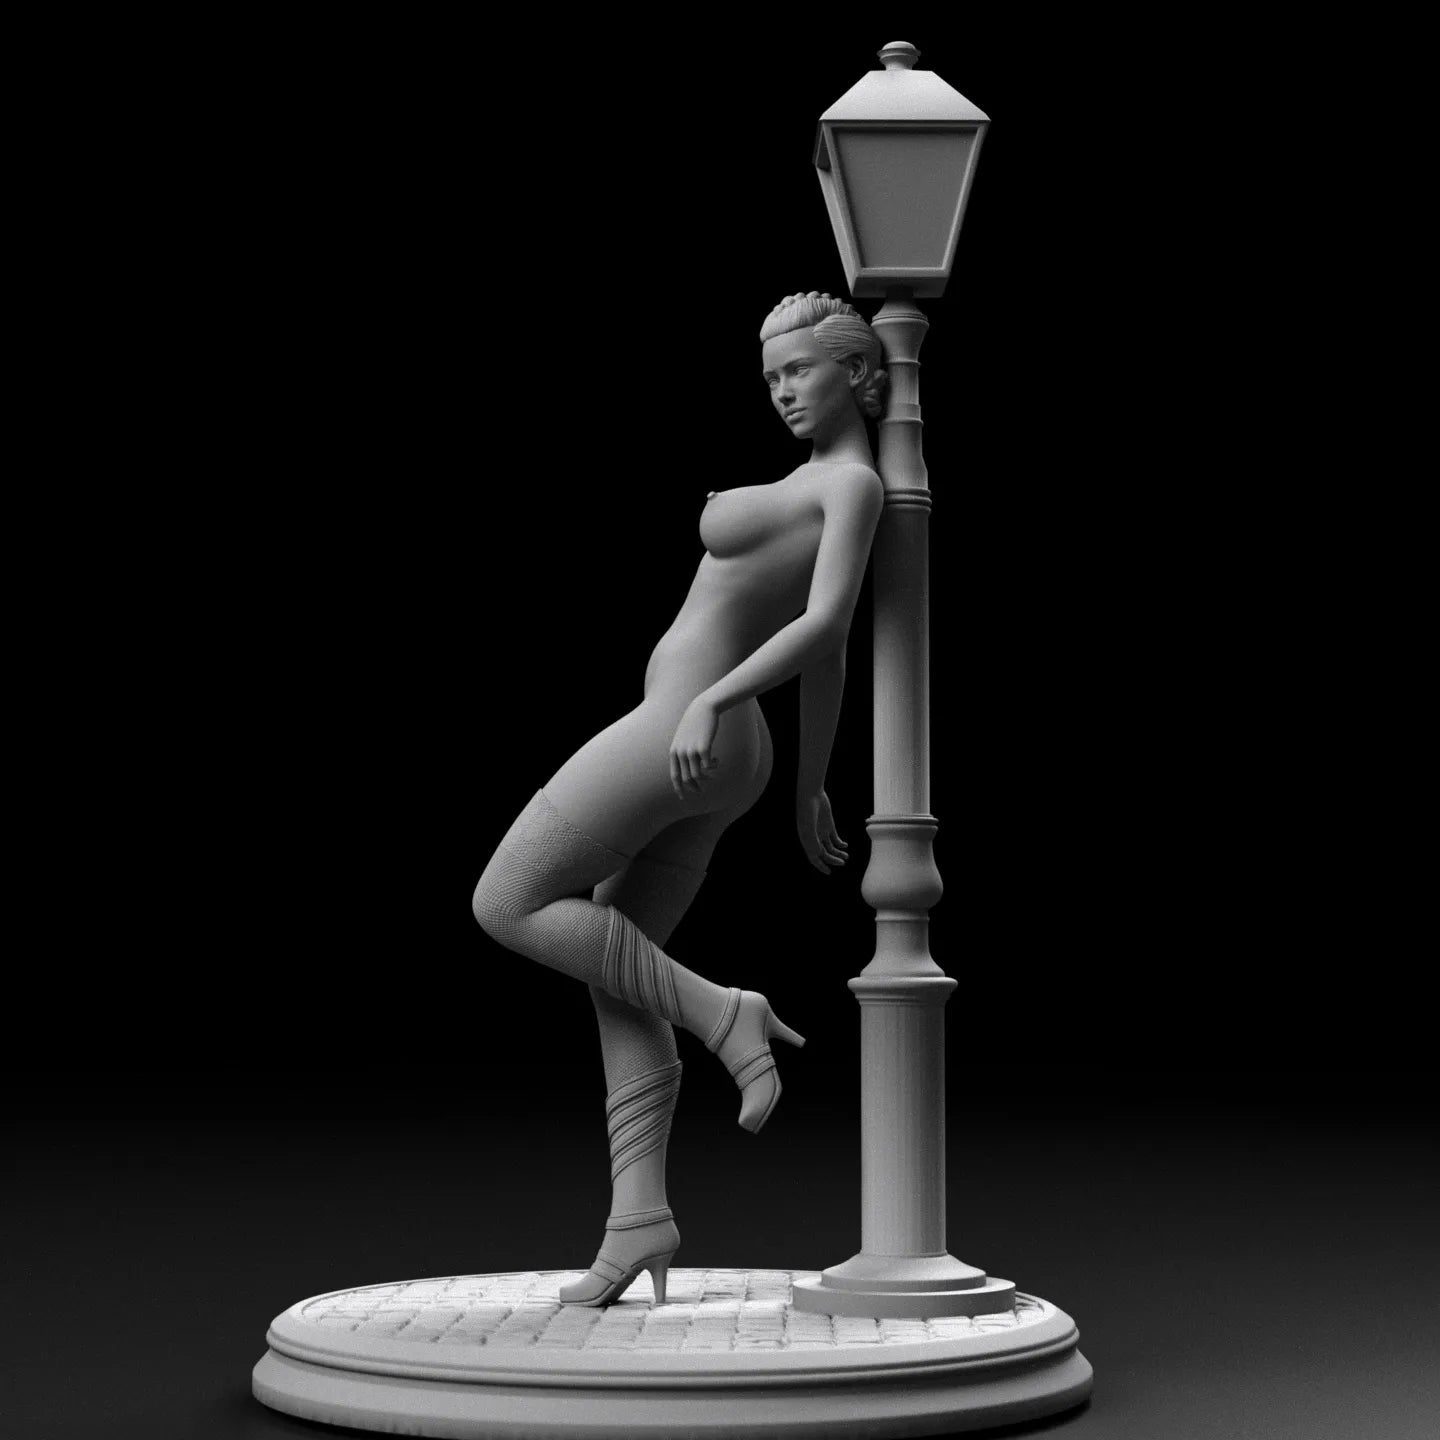 Red Light District 5 | 3D Printed | Fanart | Unpainted | NSFW Version | Figurine | Figure | Miniature | Sexy |